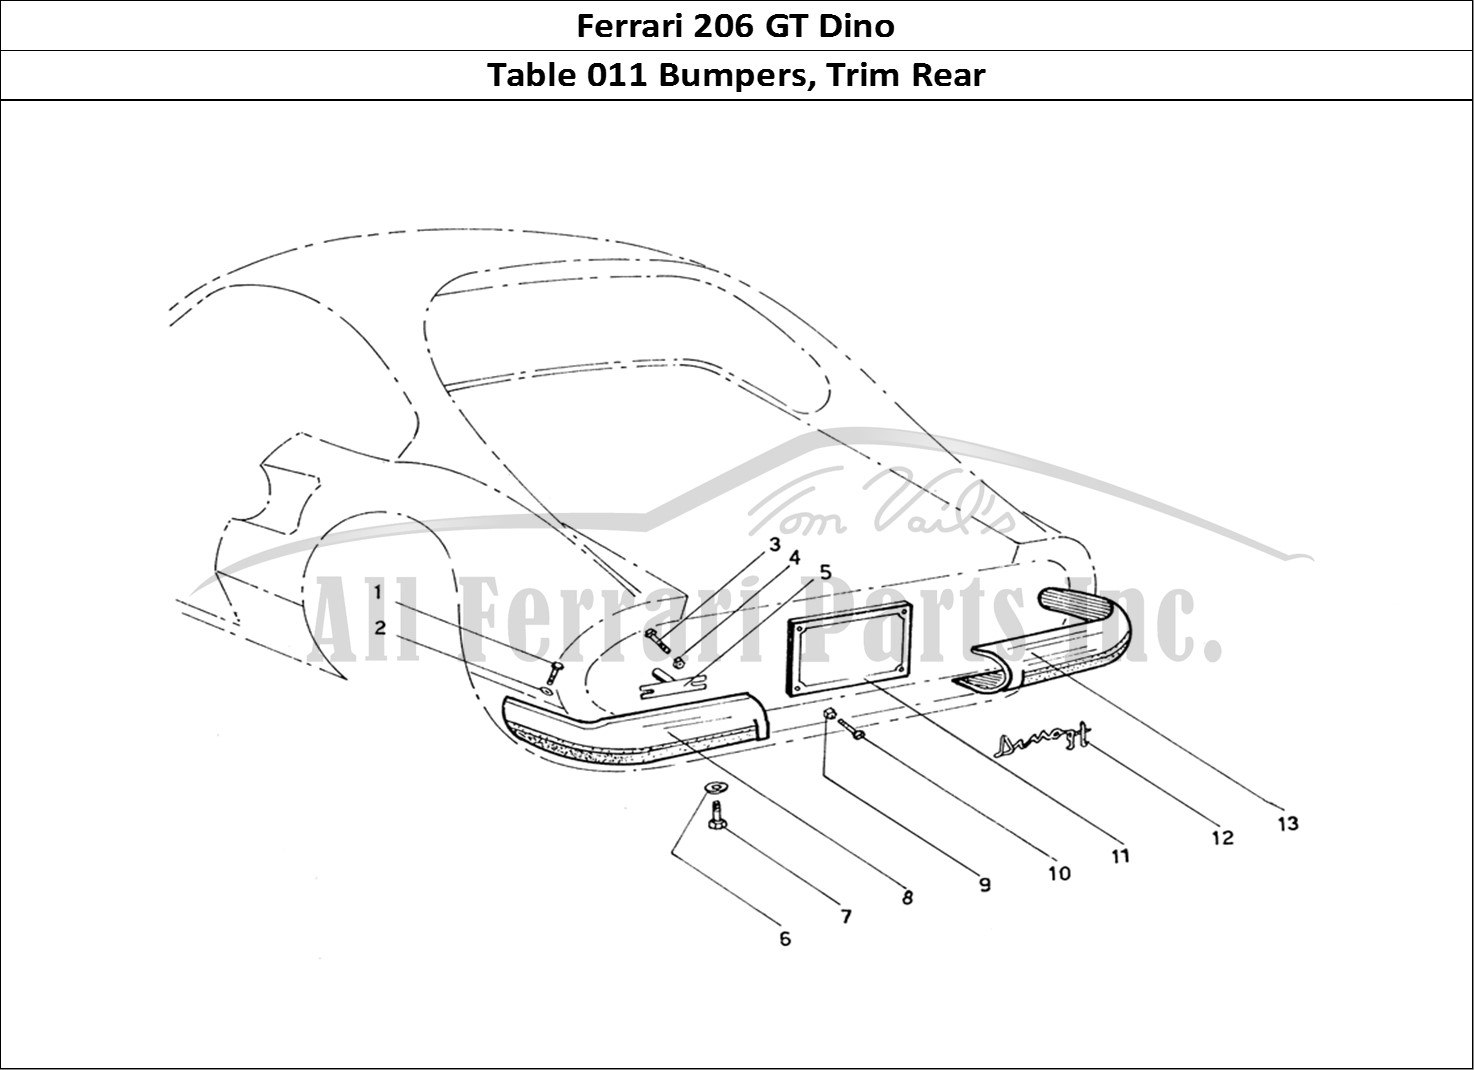 Ferrari Parts Ferrari 206 GT Dino (Coachwork) Page 011 Rear Bumpers & Fixings